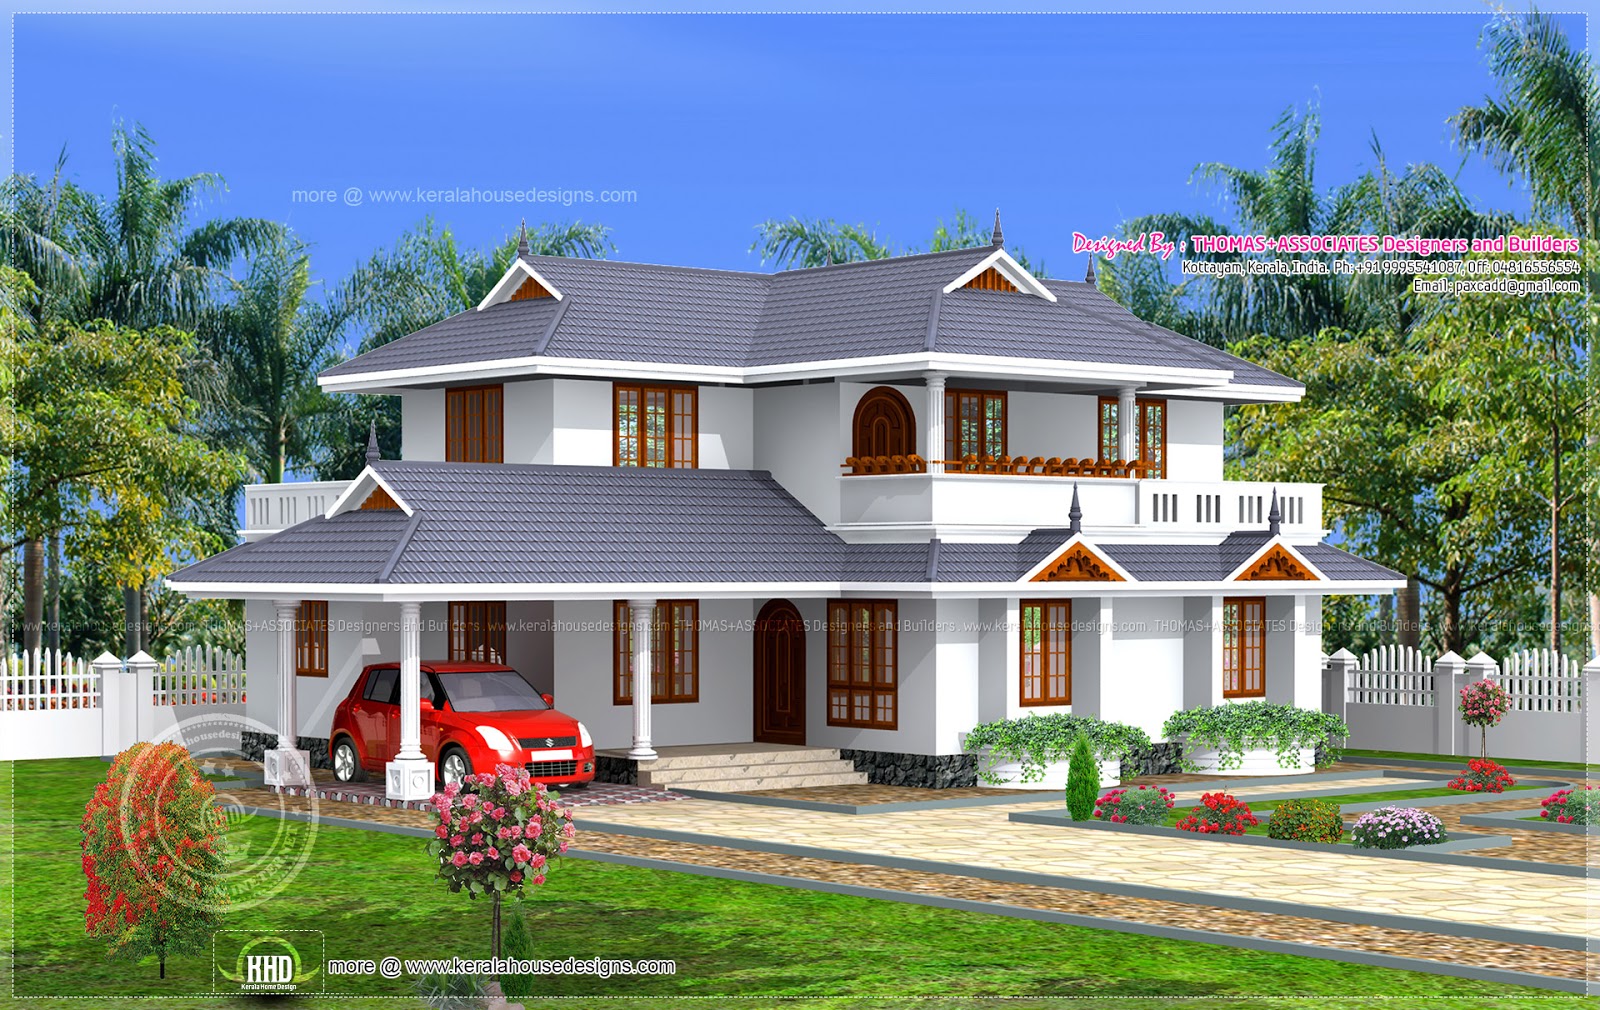 4 bedroom Kerala  model  home  in 204 sq meter Kerala  home  